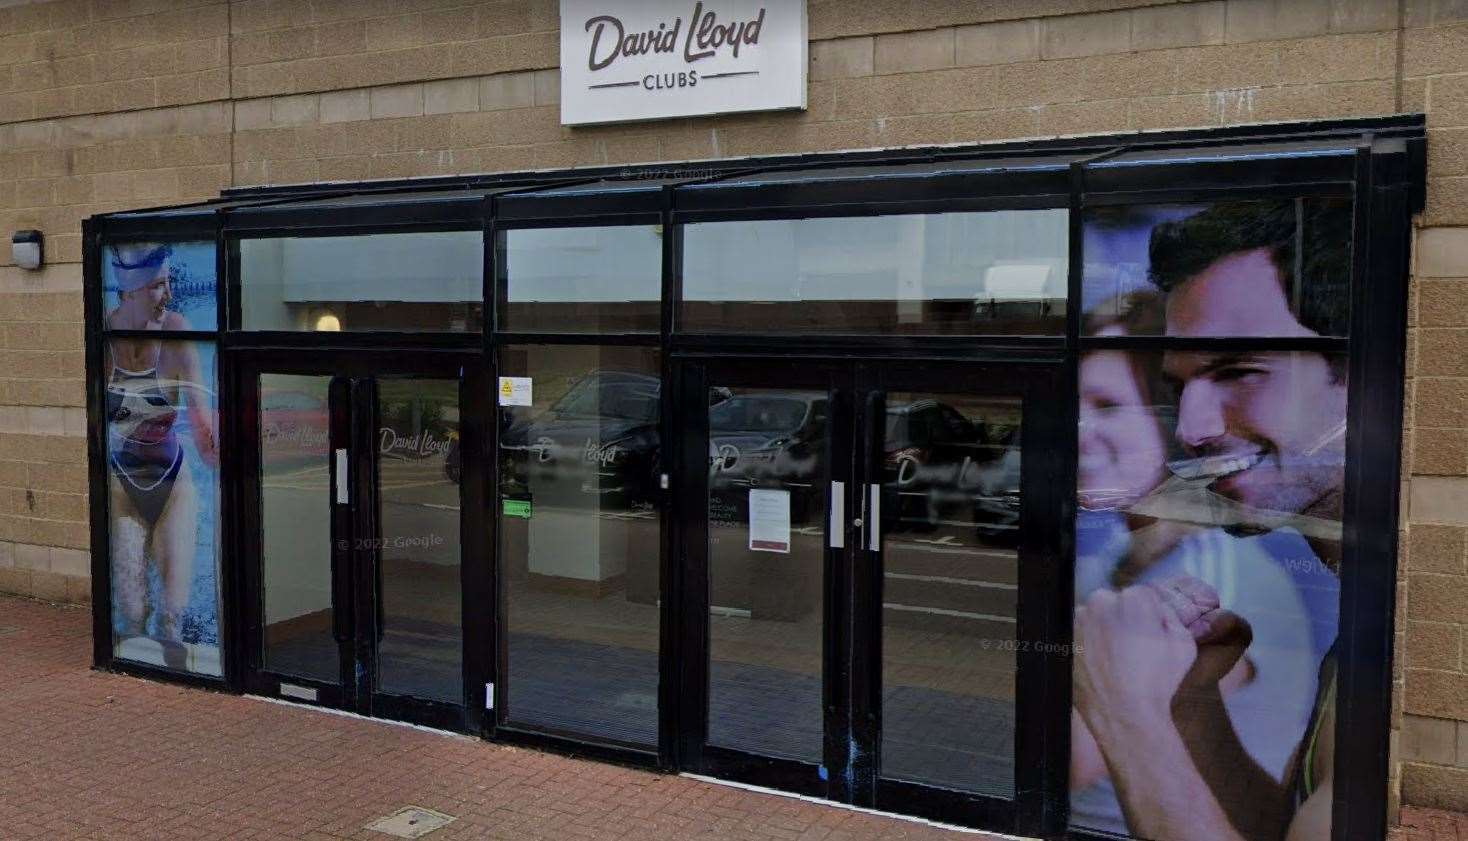 The David Lloyd club in Maidstone. Picture: Google Maps